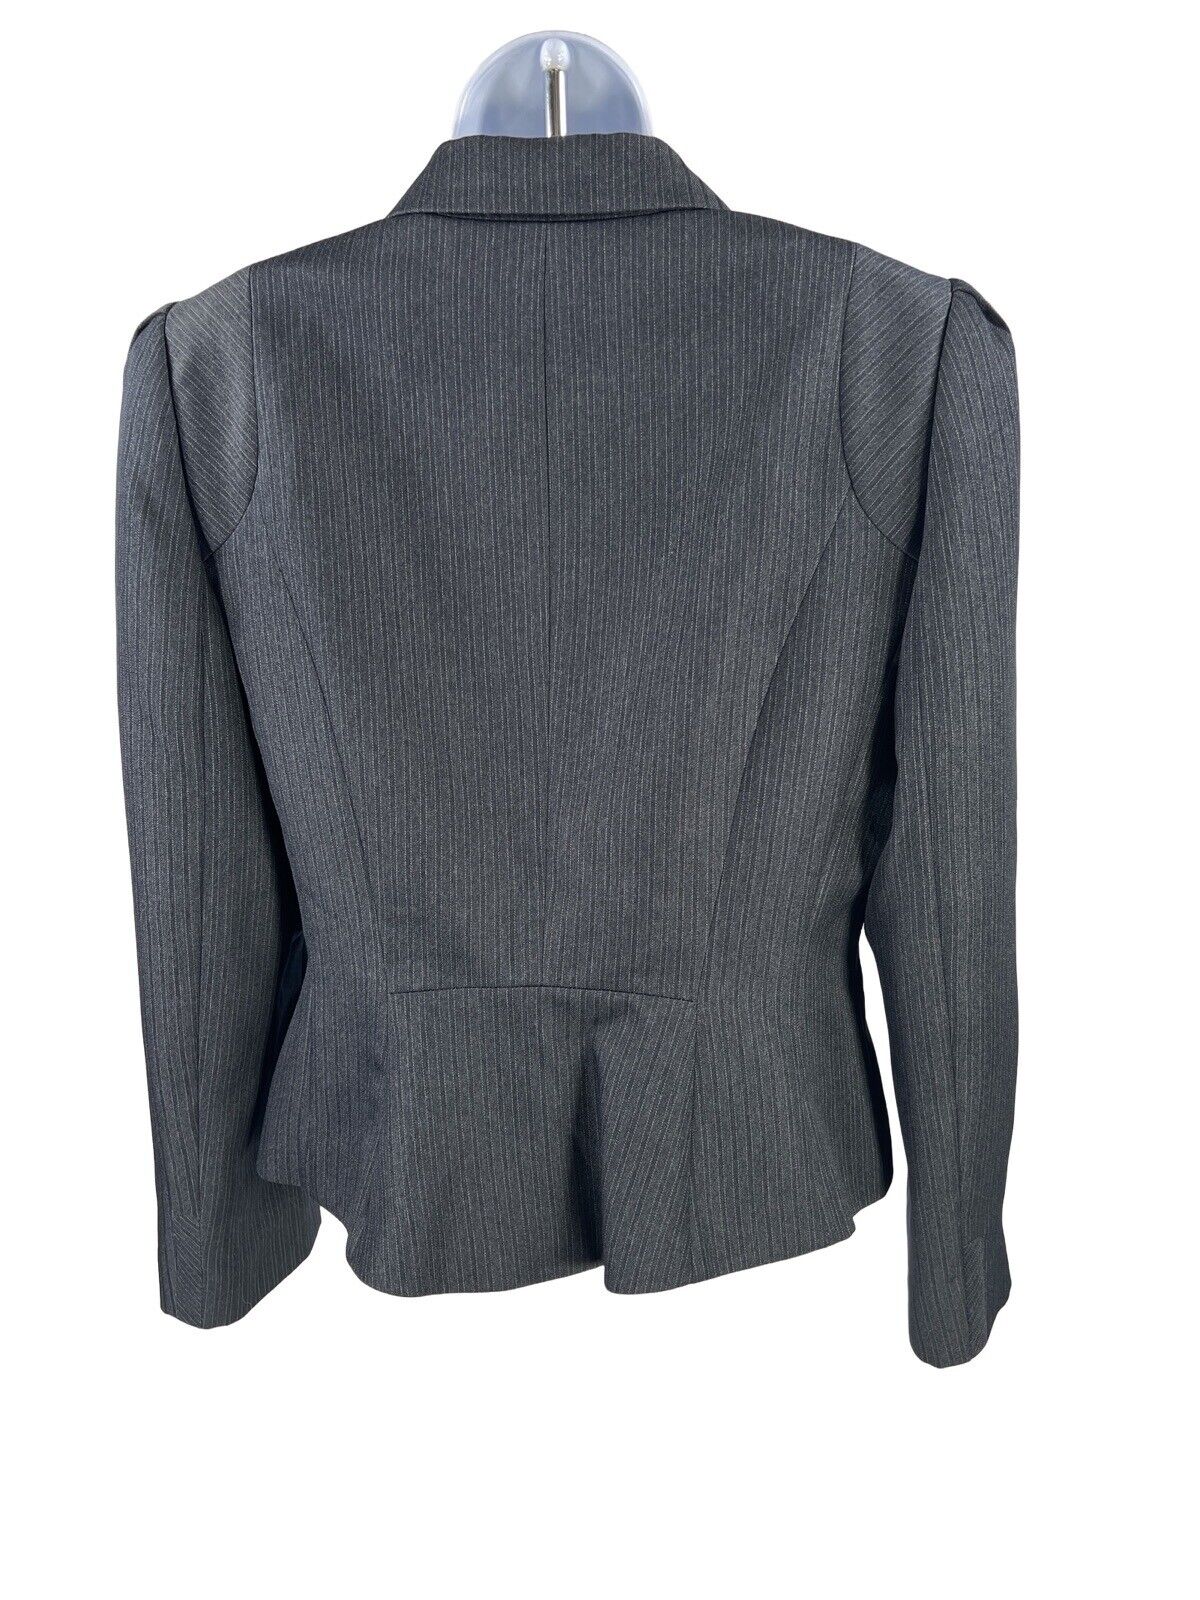 Tahari Women's Charcoal Gray Pinstripe Snap Button Blazer - Petite 10P